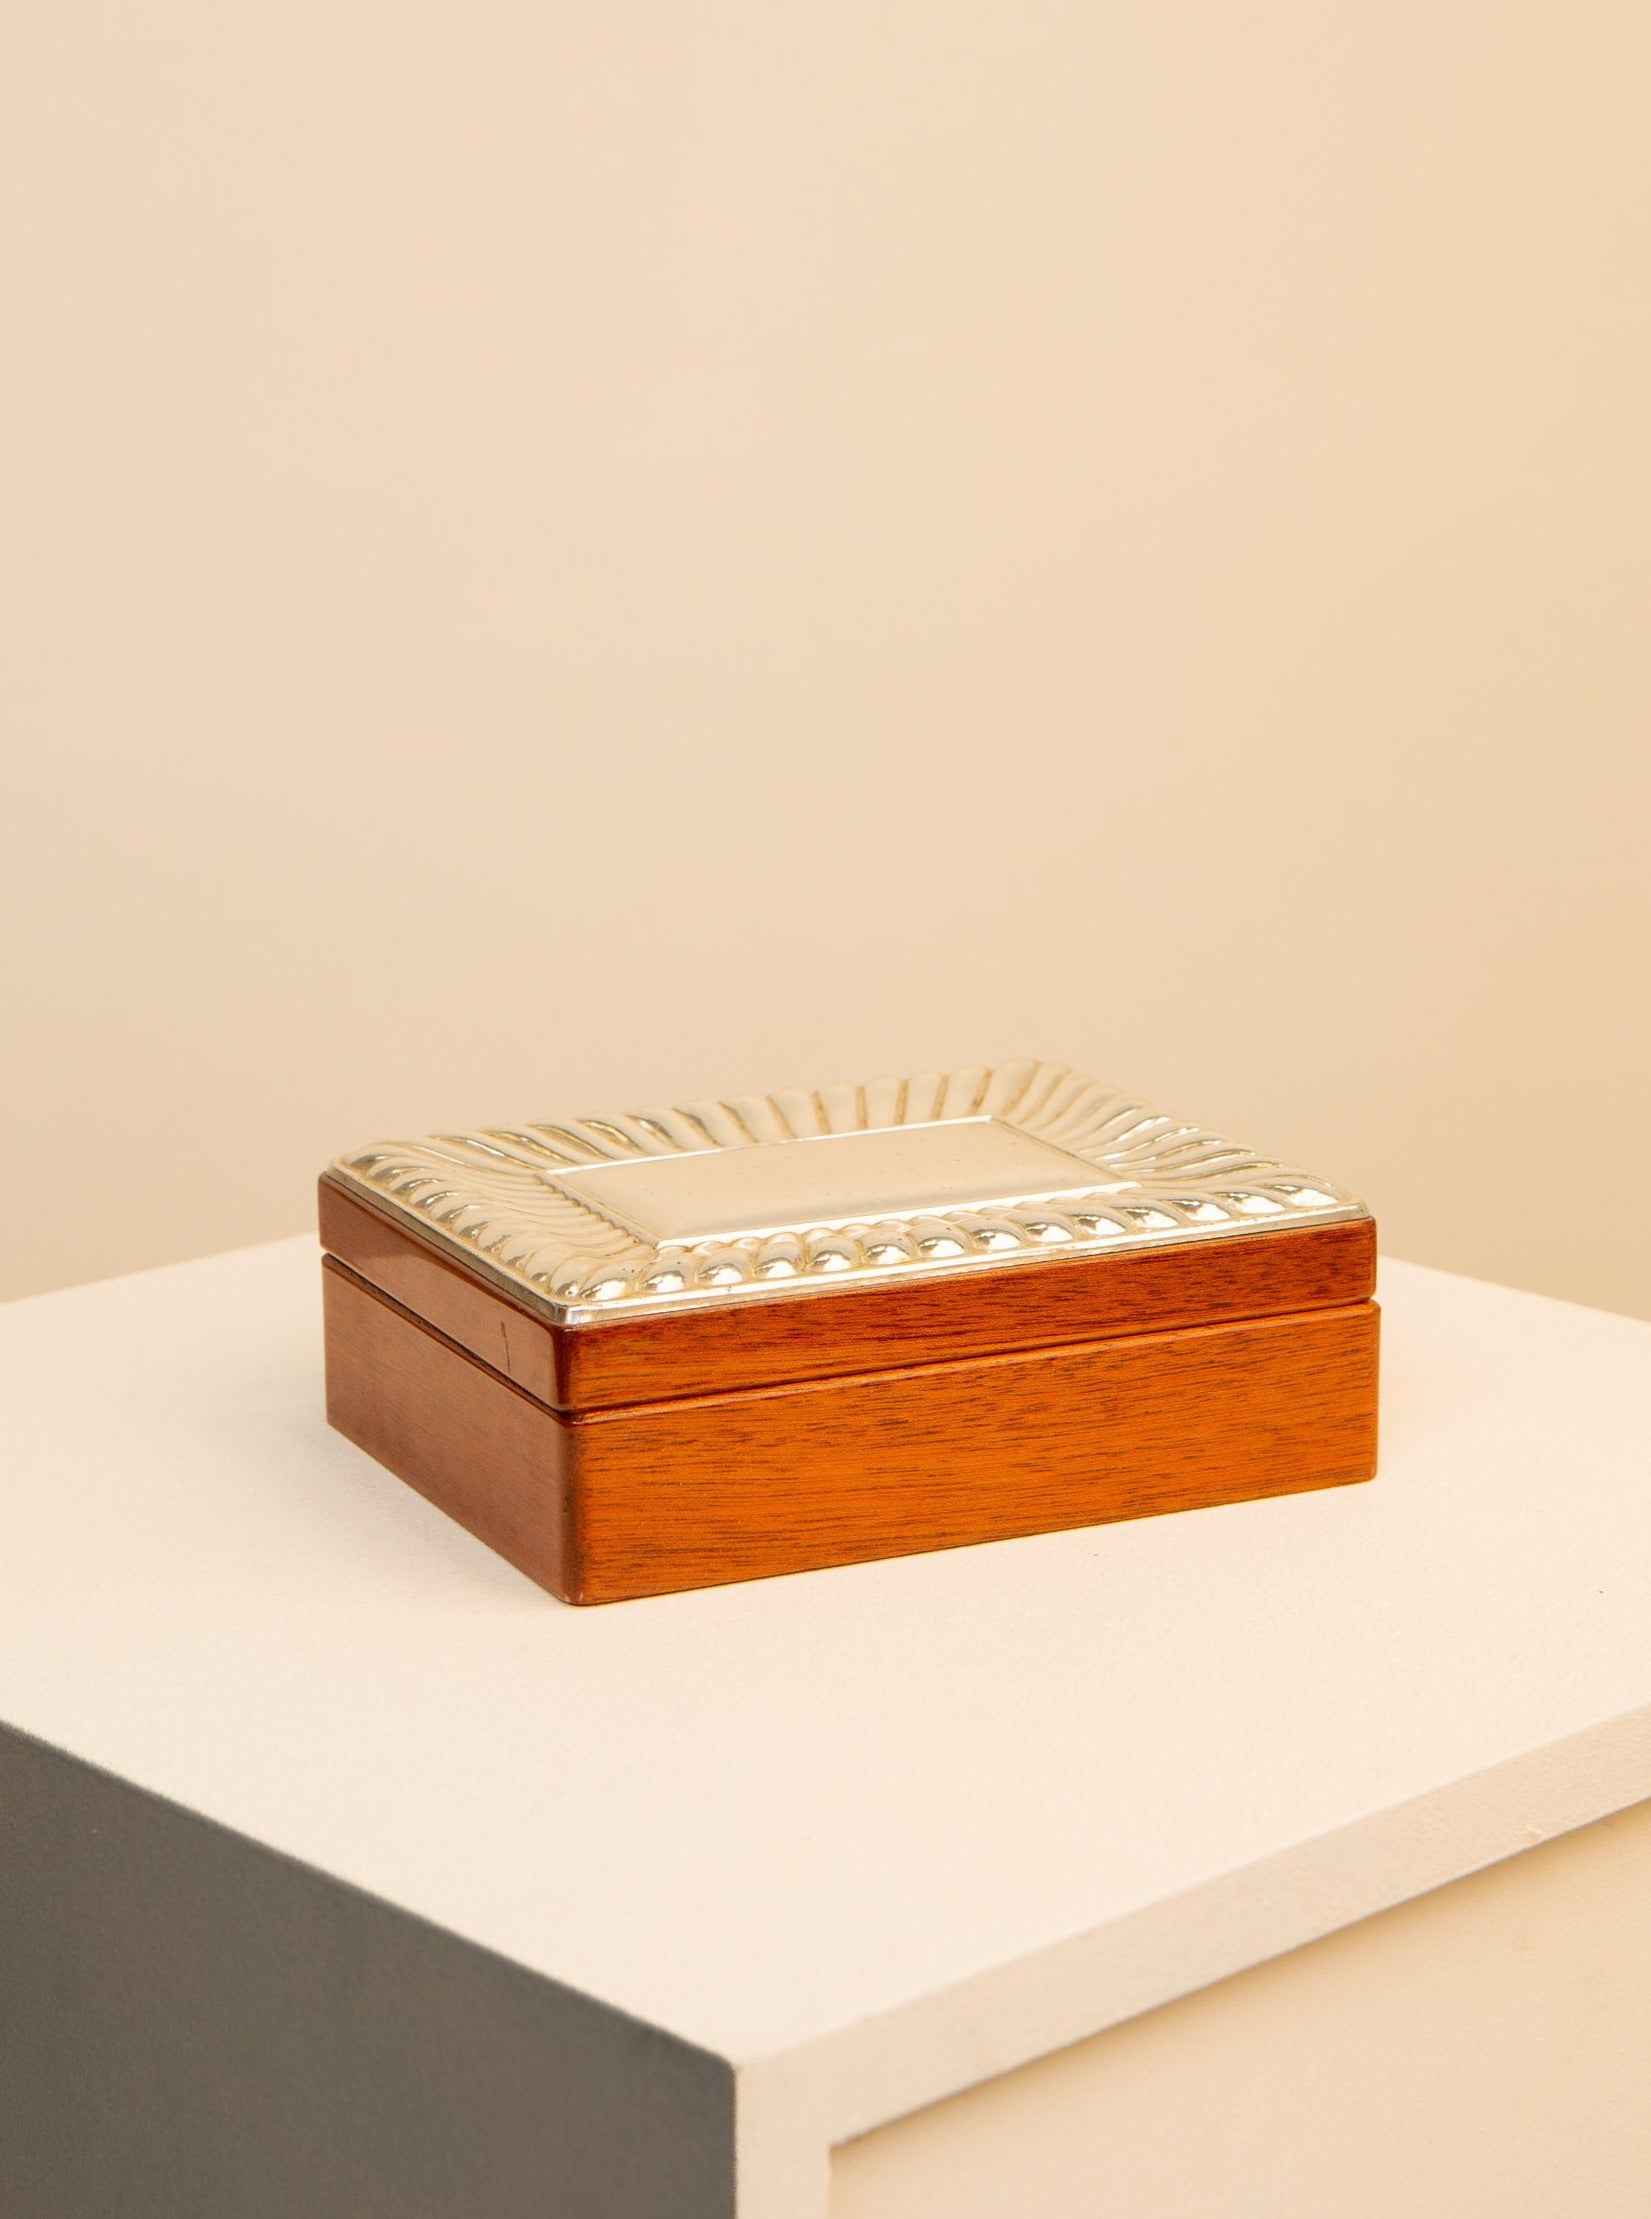 USA 80's Rectangular Wooden Box